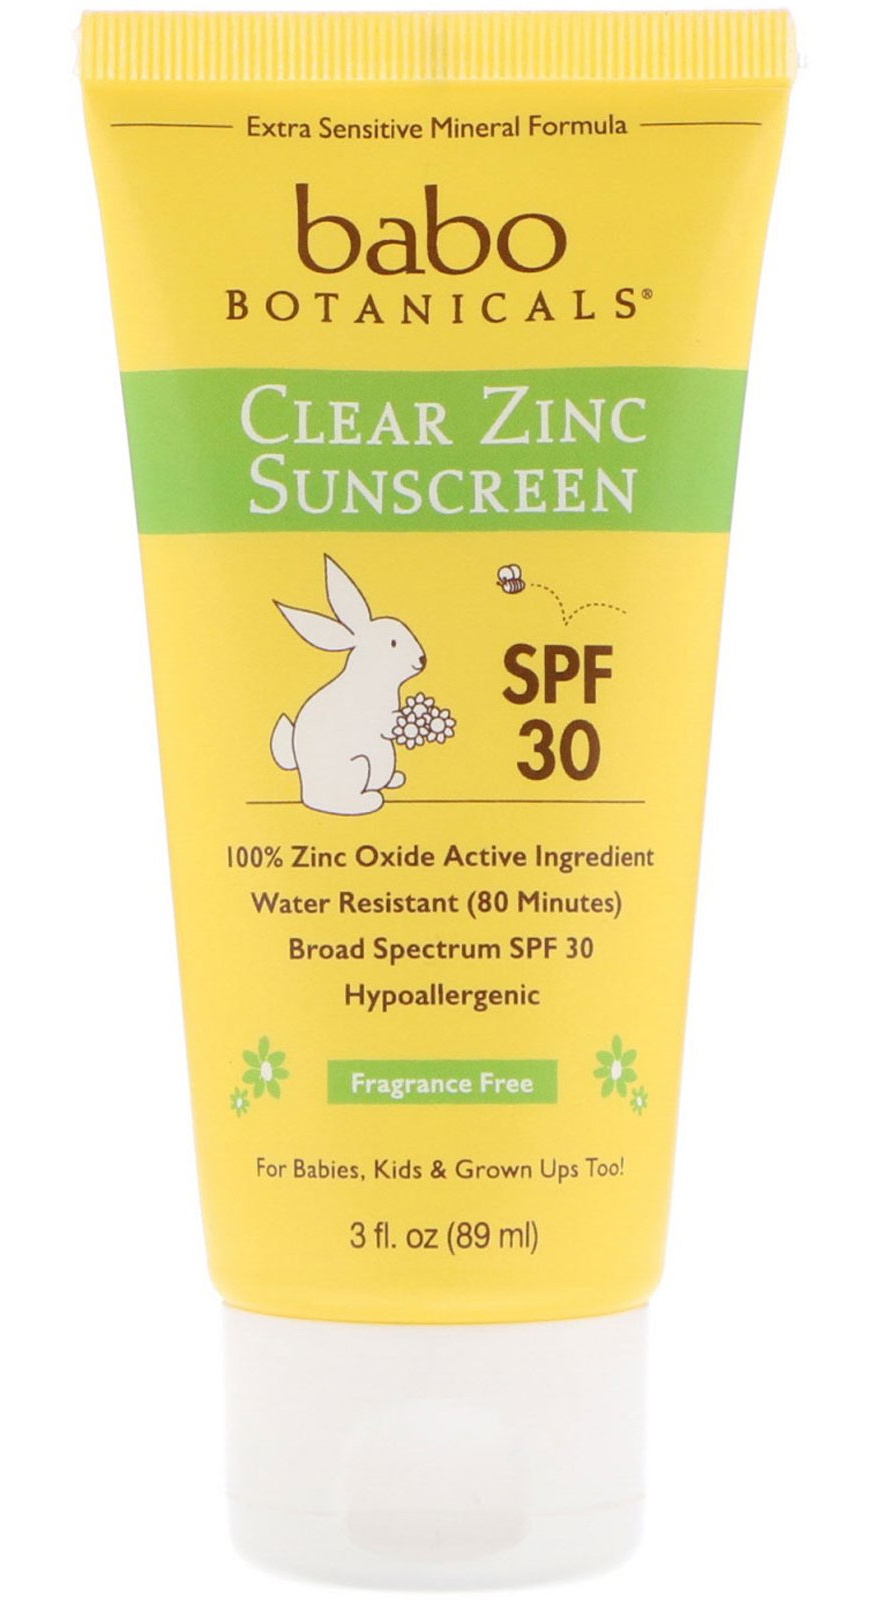 Babo Botanicals Clear Zinc Sunscreen Spf 30